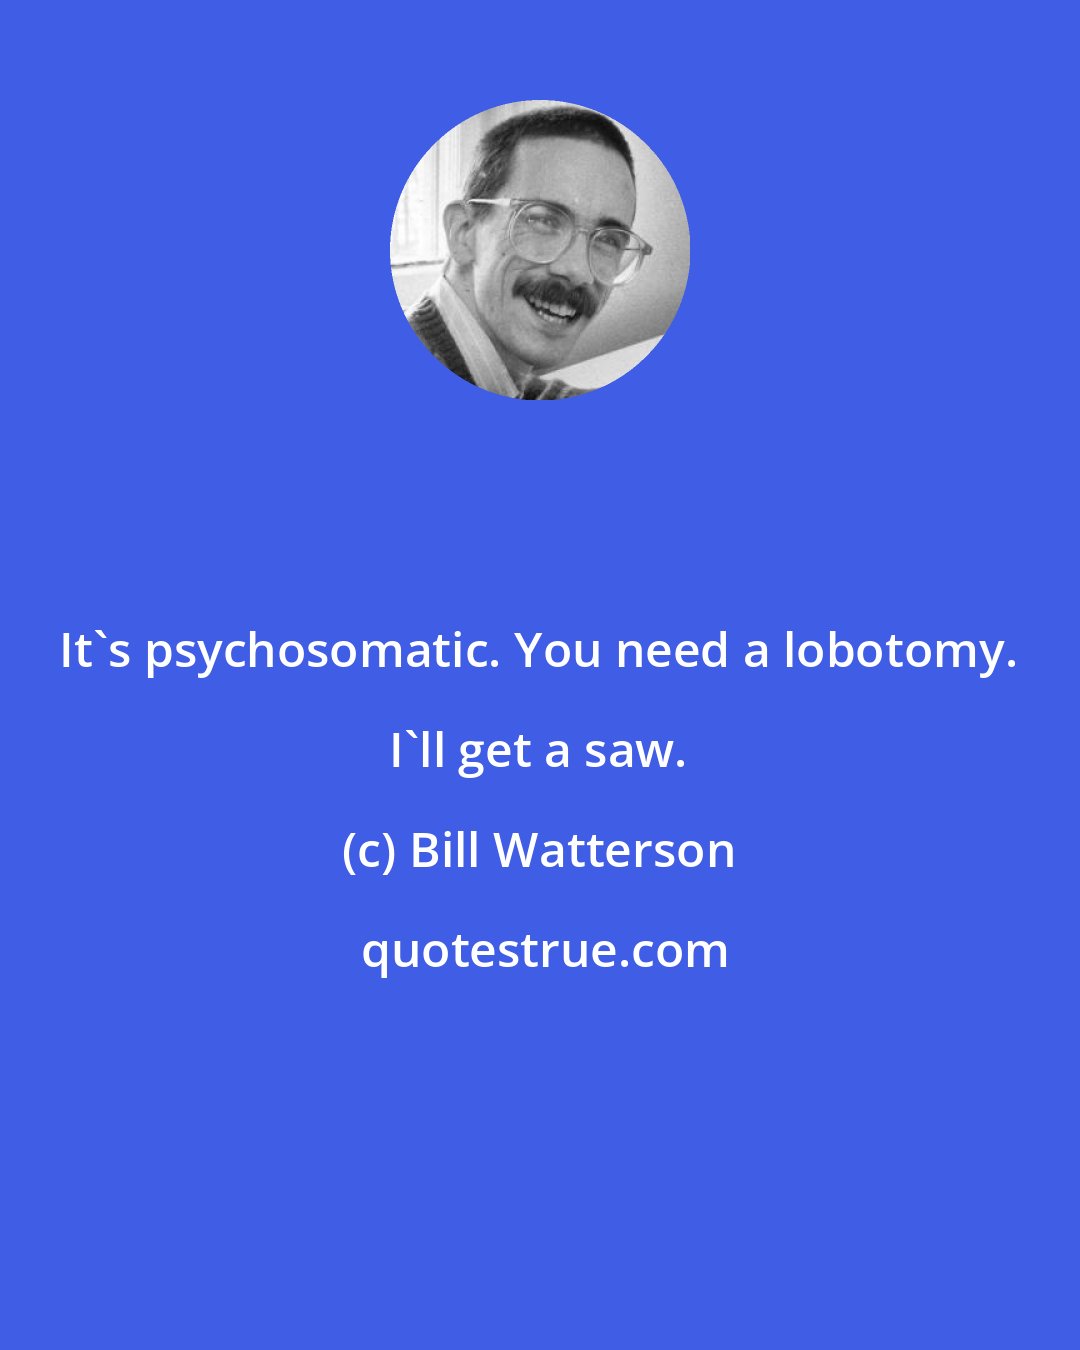 Bill Watterson: It's psychosomatic. You need a lobotomy. I'll get a saw.